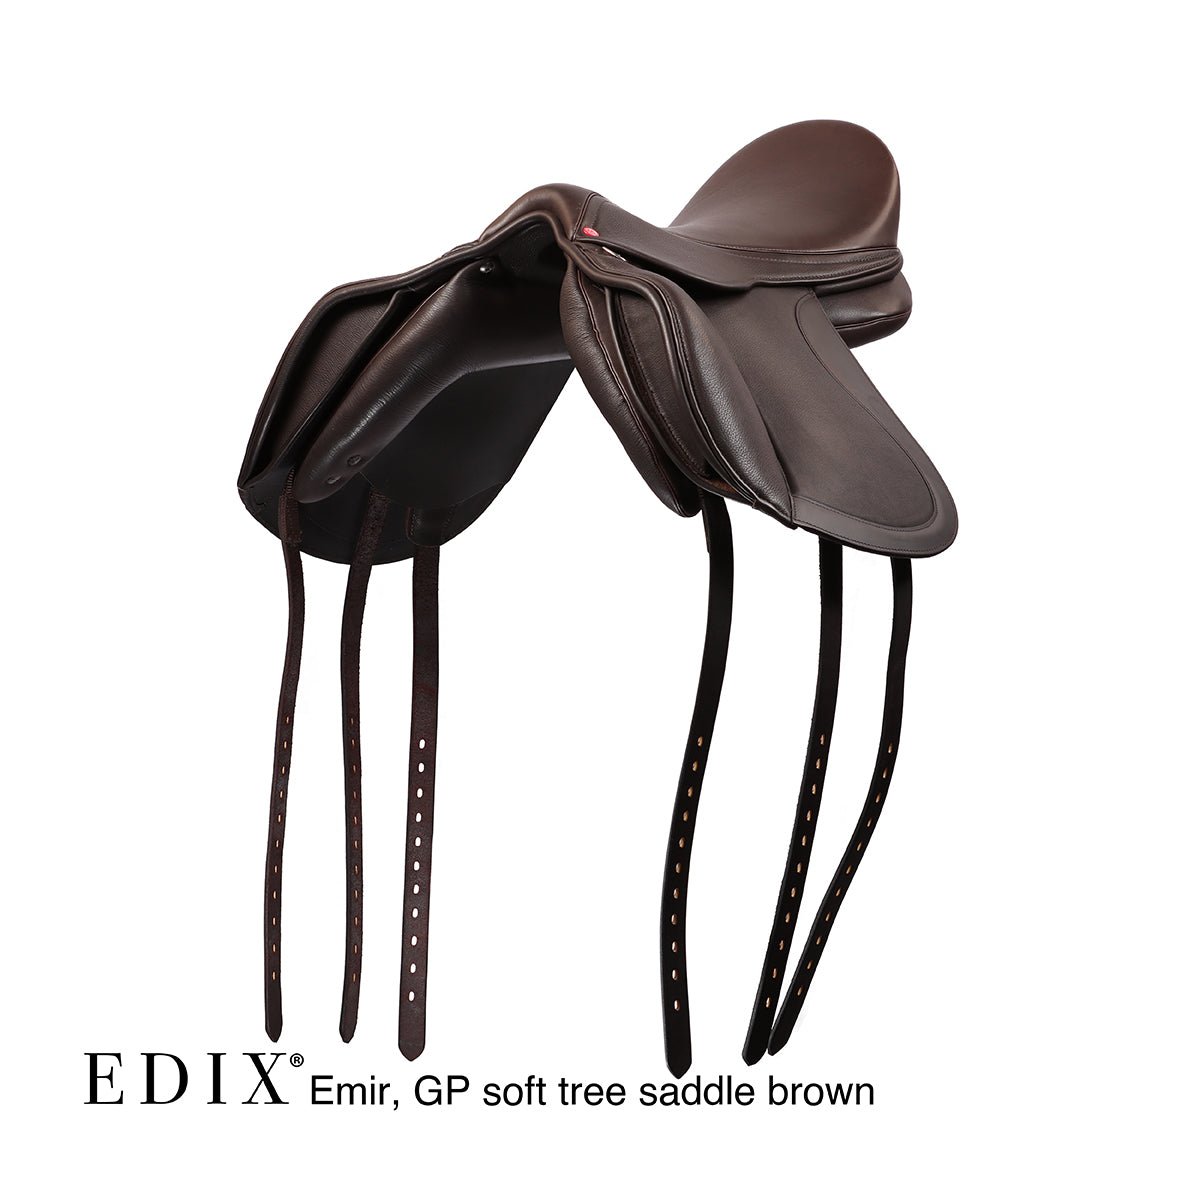 17.5" Edix Emir All-Purpose Soft Tree Saddle - Used Demo